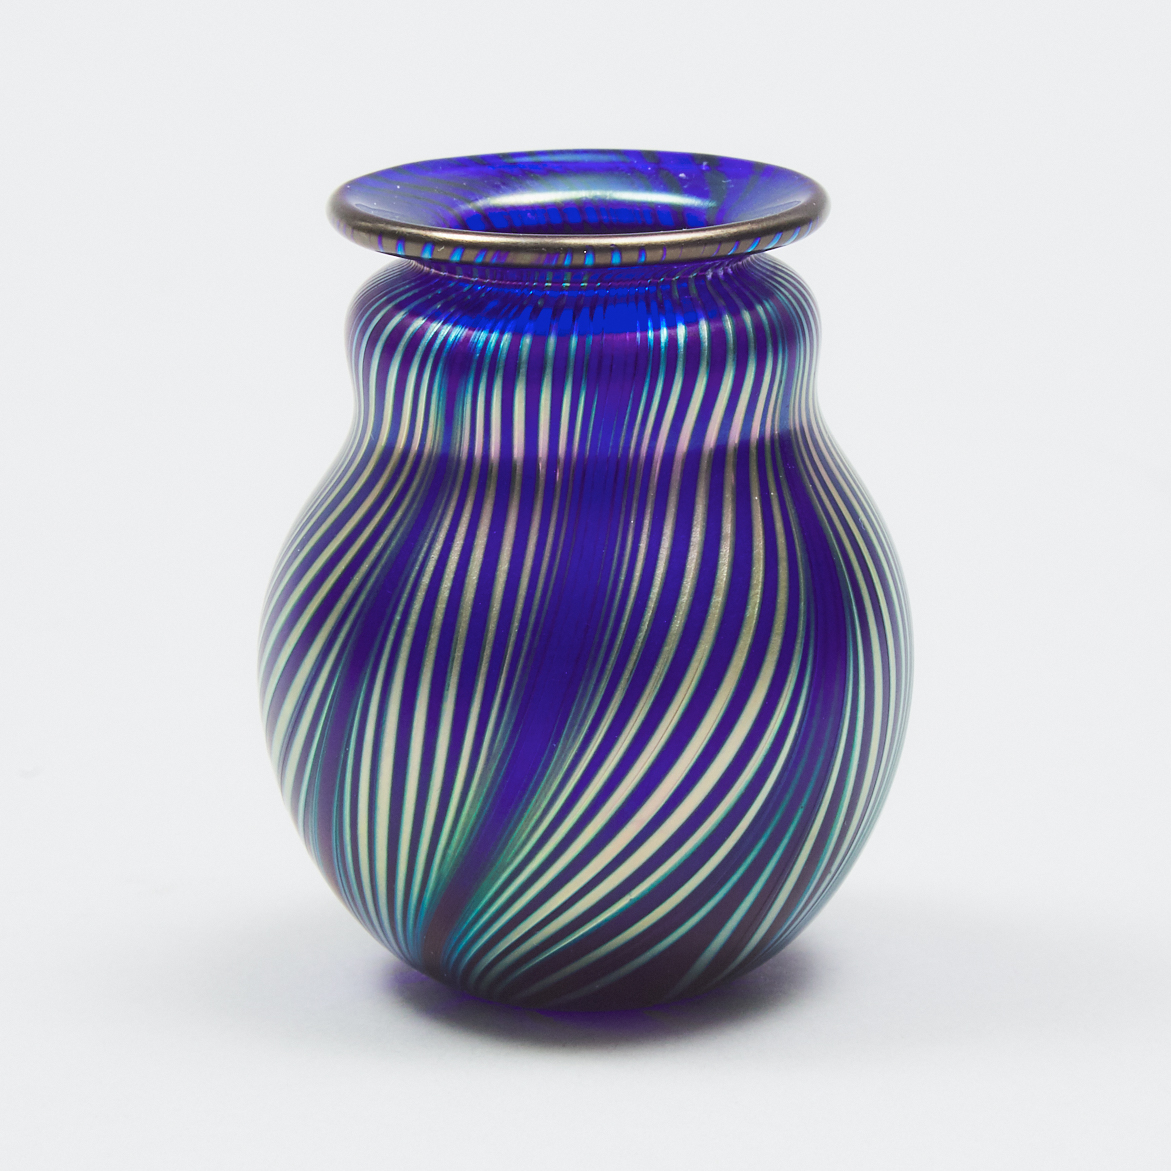 David Lotton (American, b.1960), Miniature Iridescent Glass Vase, 1993